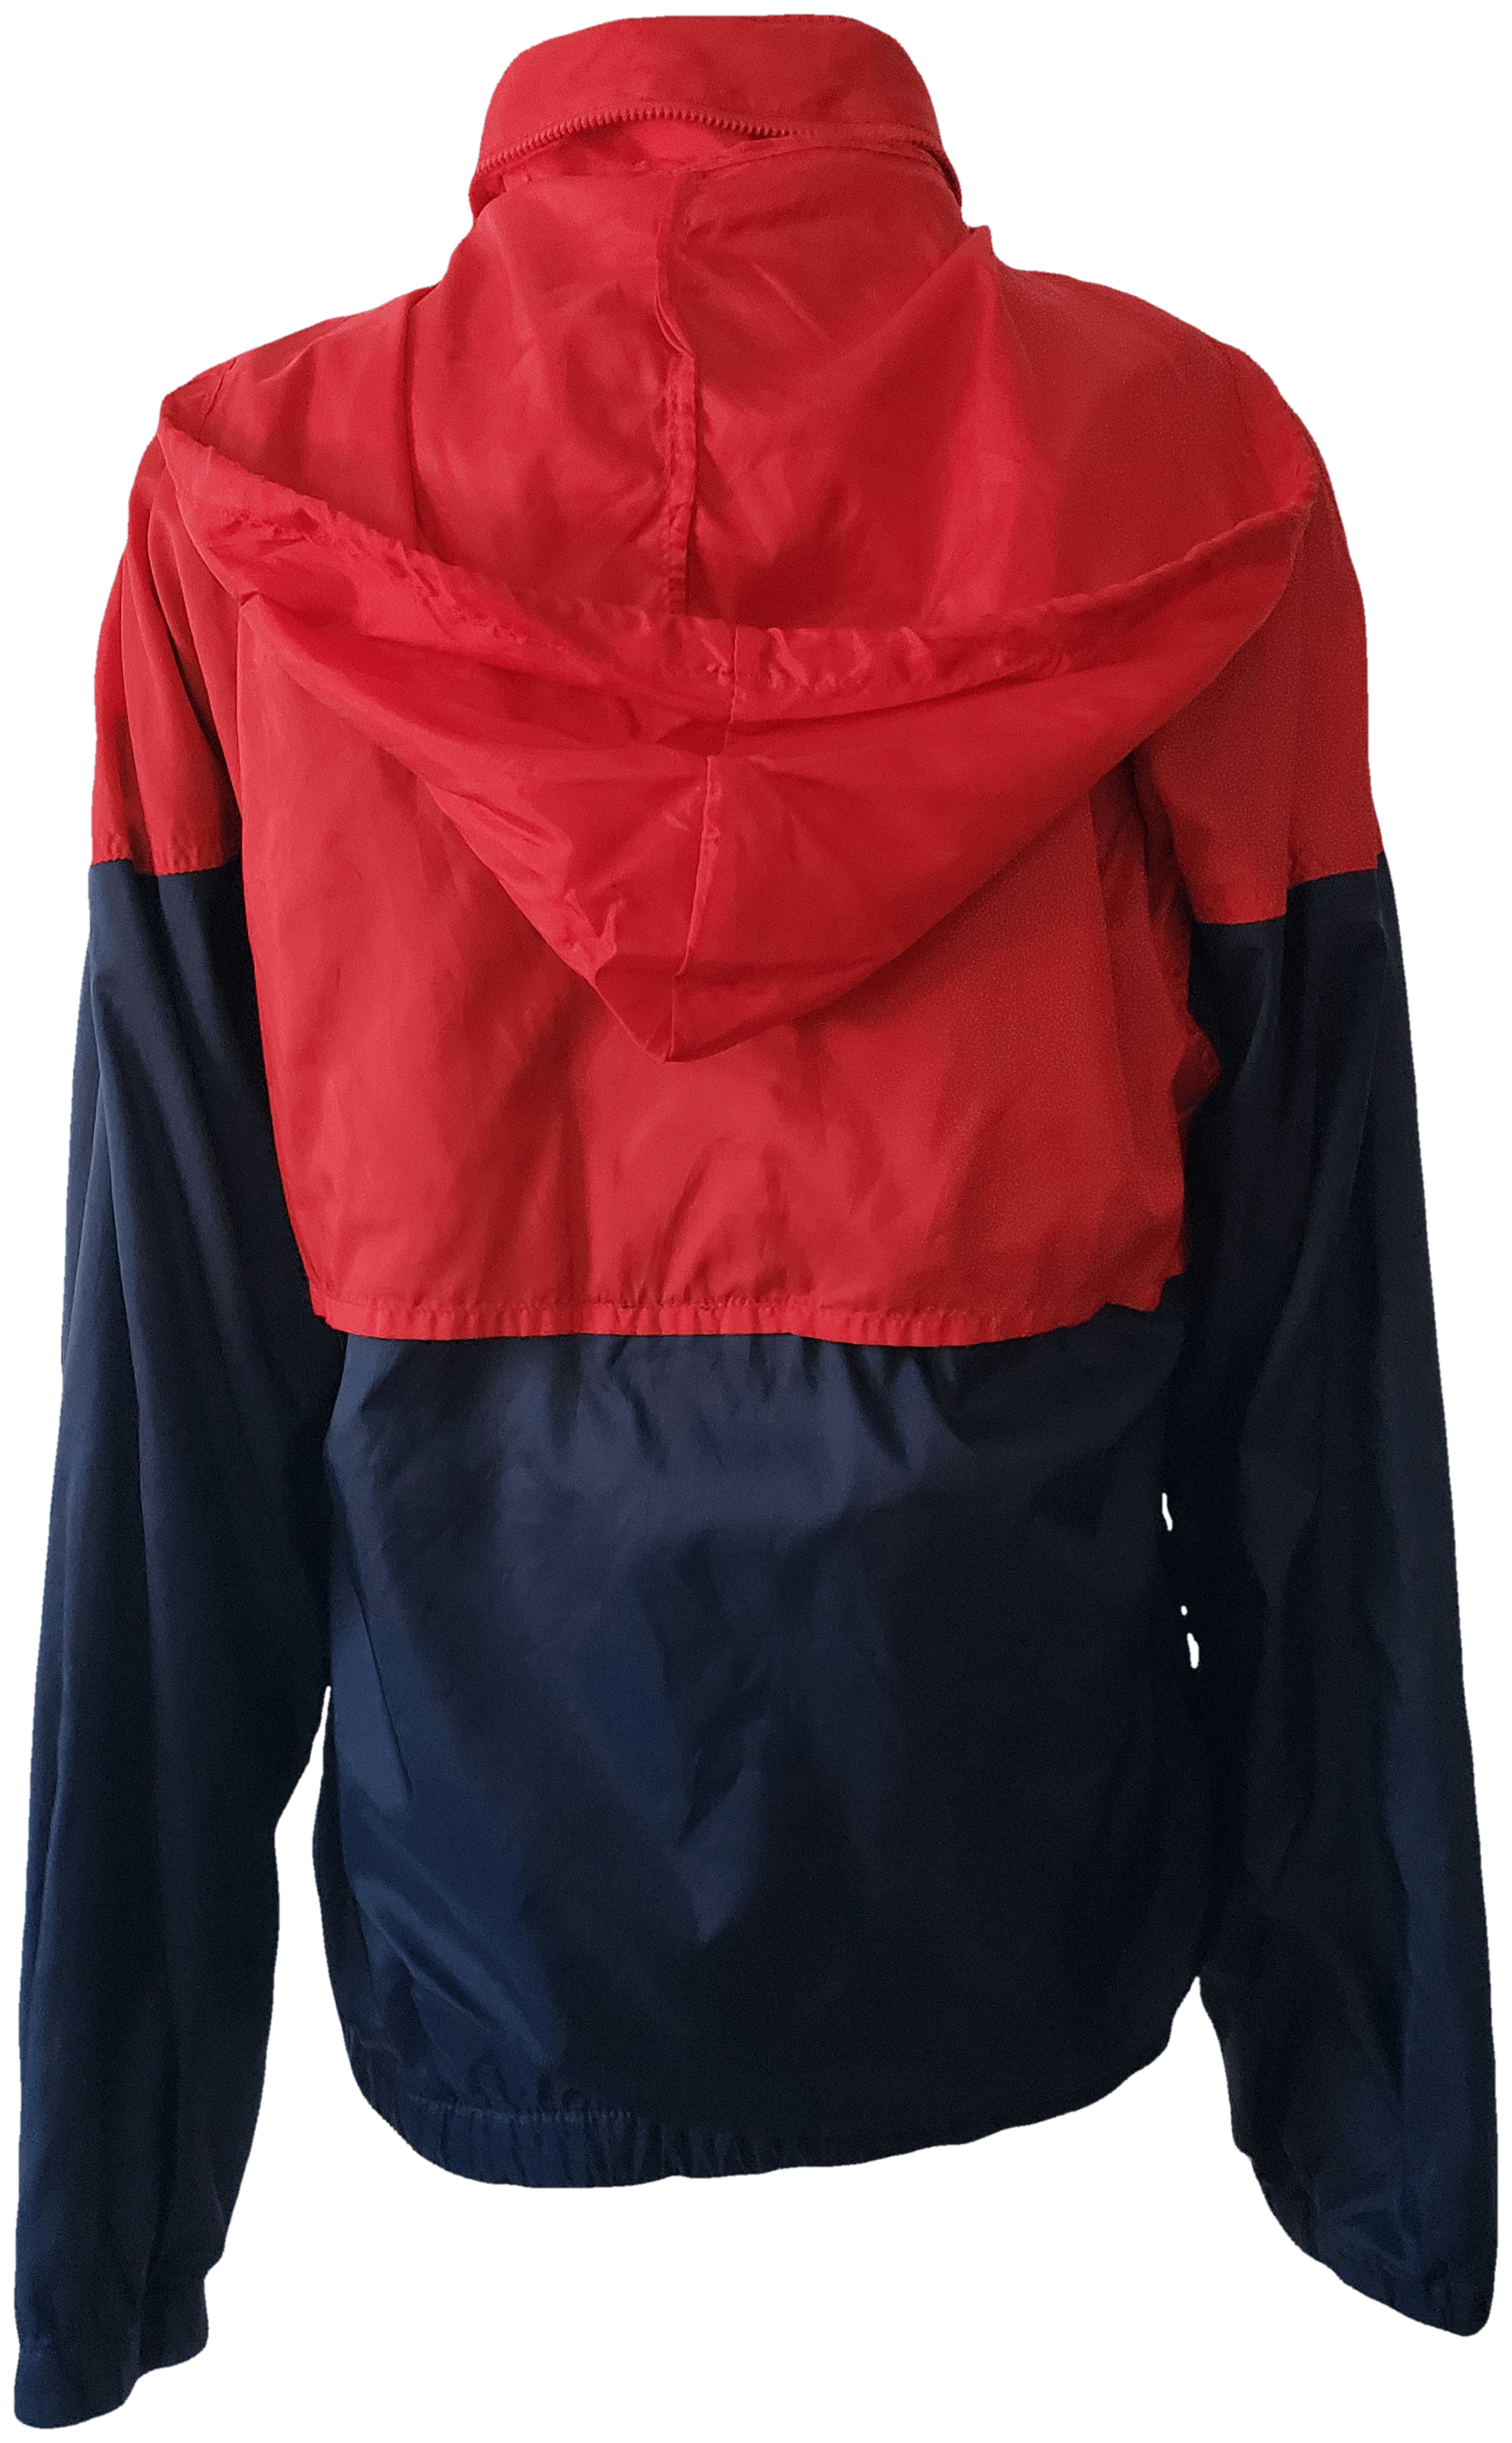 adidas red white blue jacket